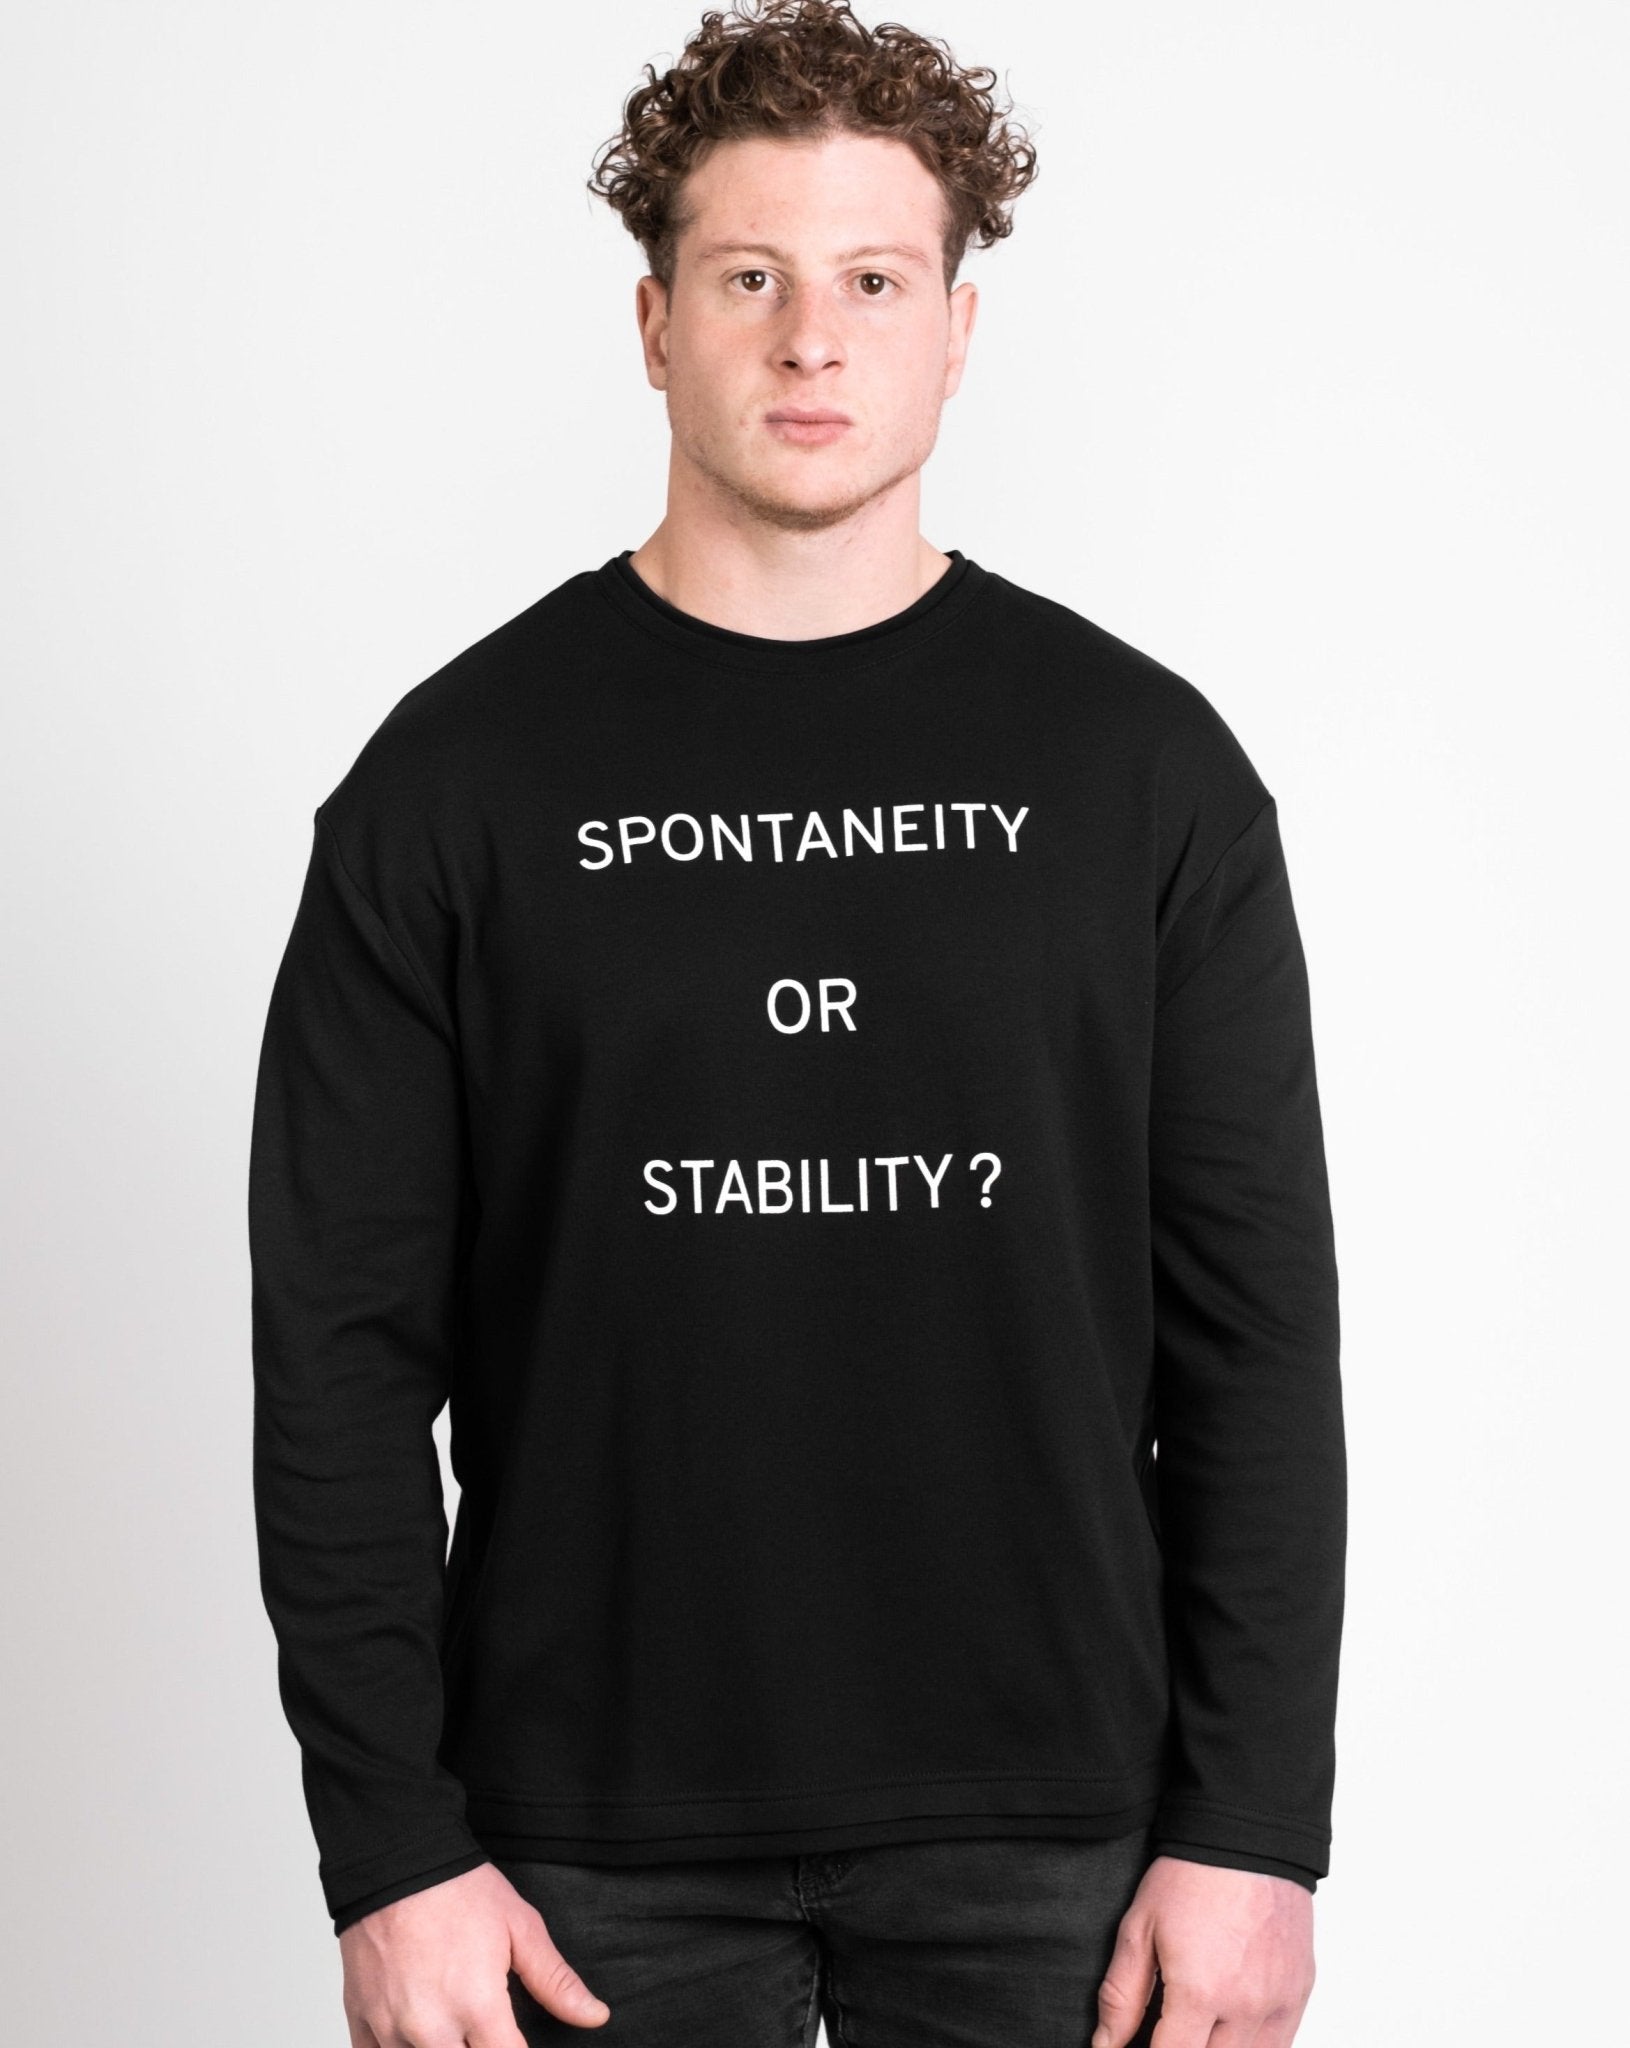 Spontaneity or stability? - OBLIVIOUS?